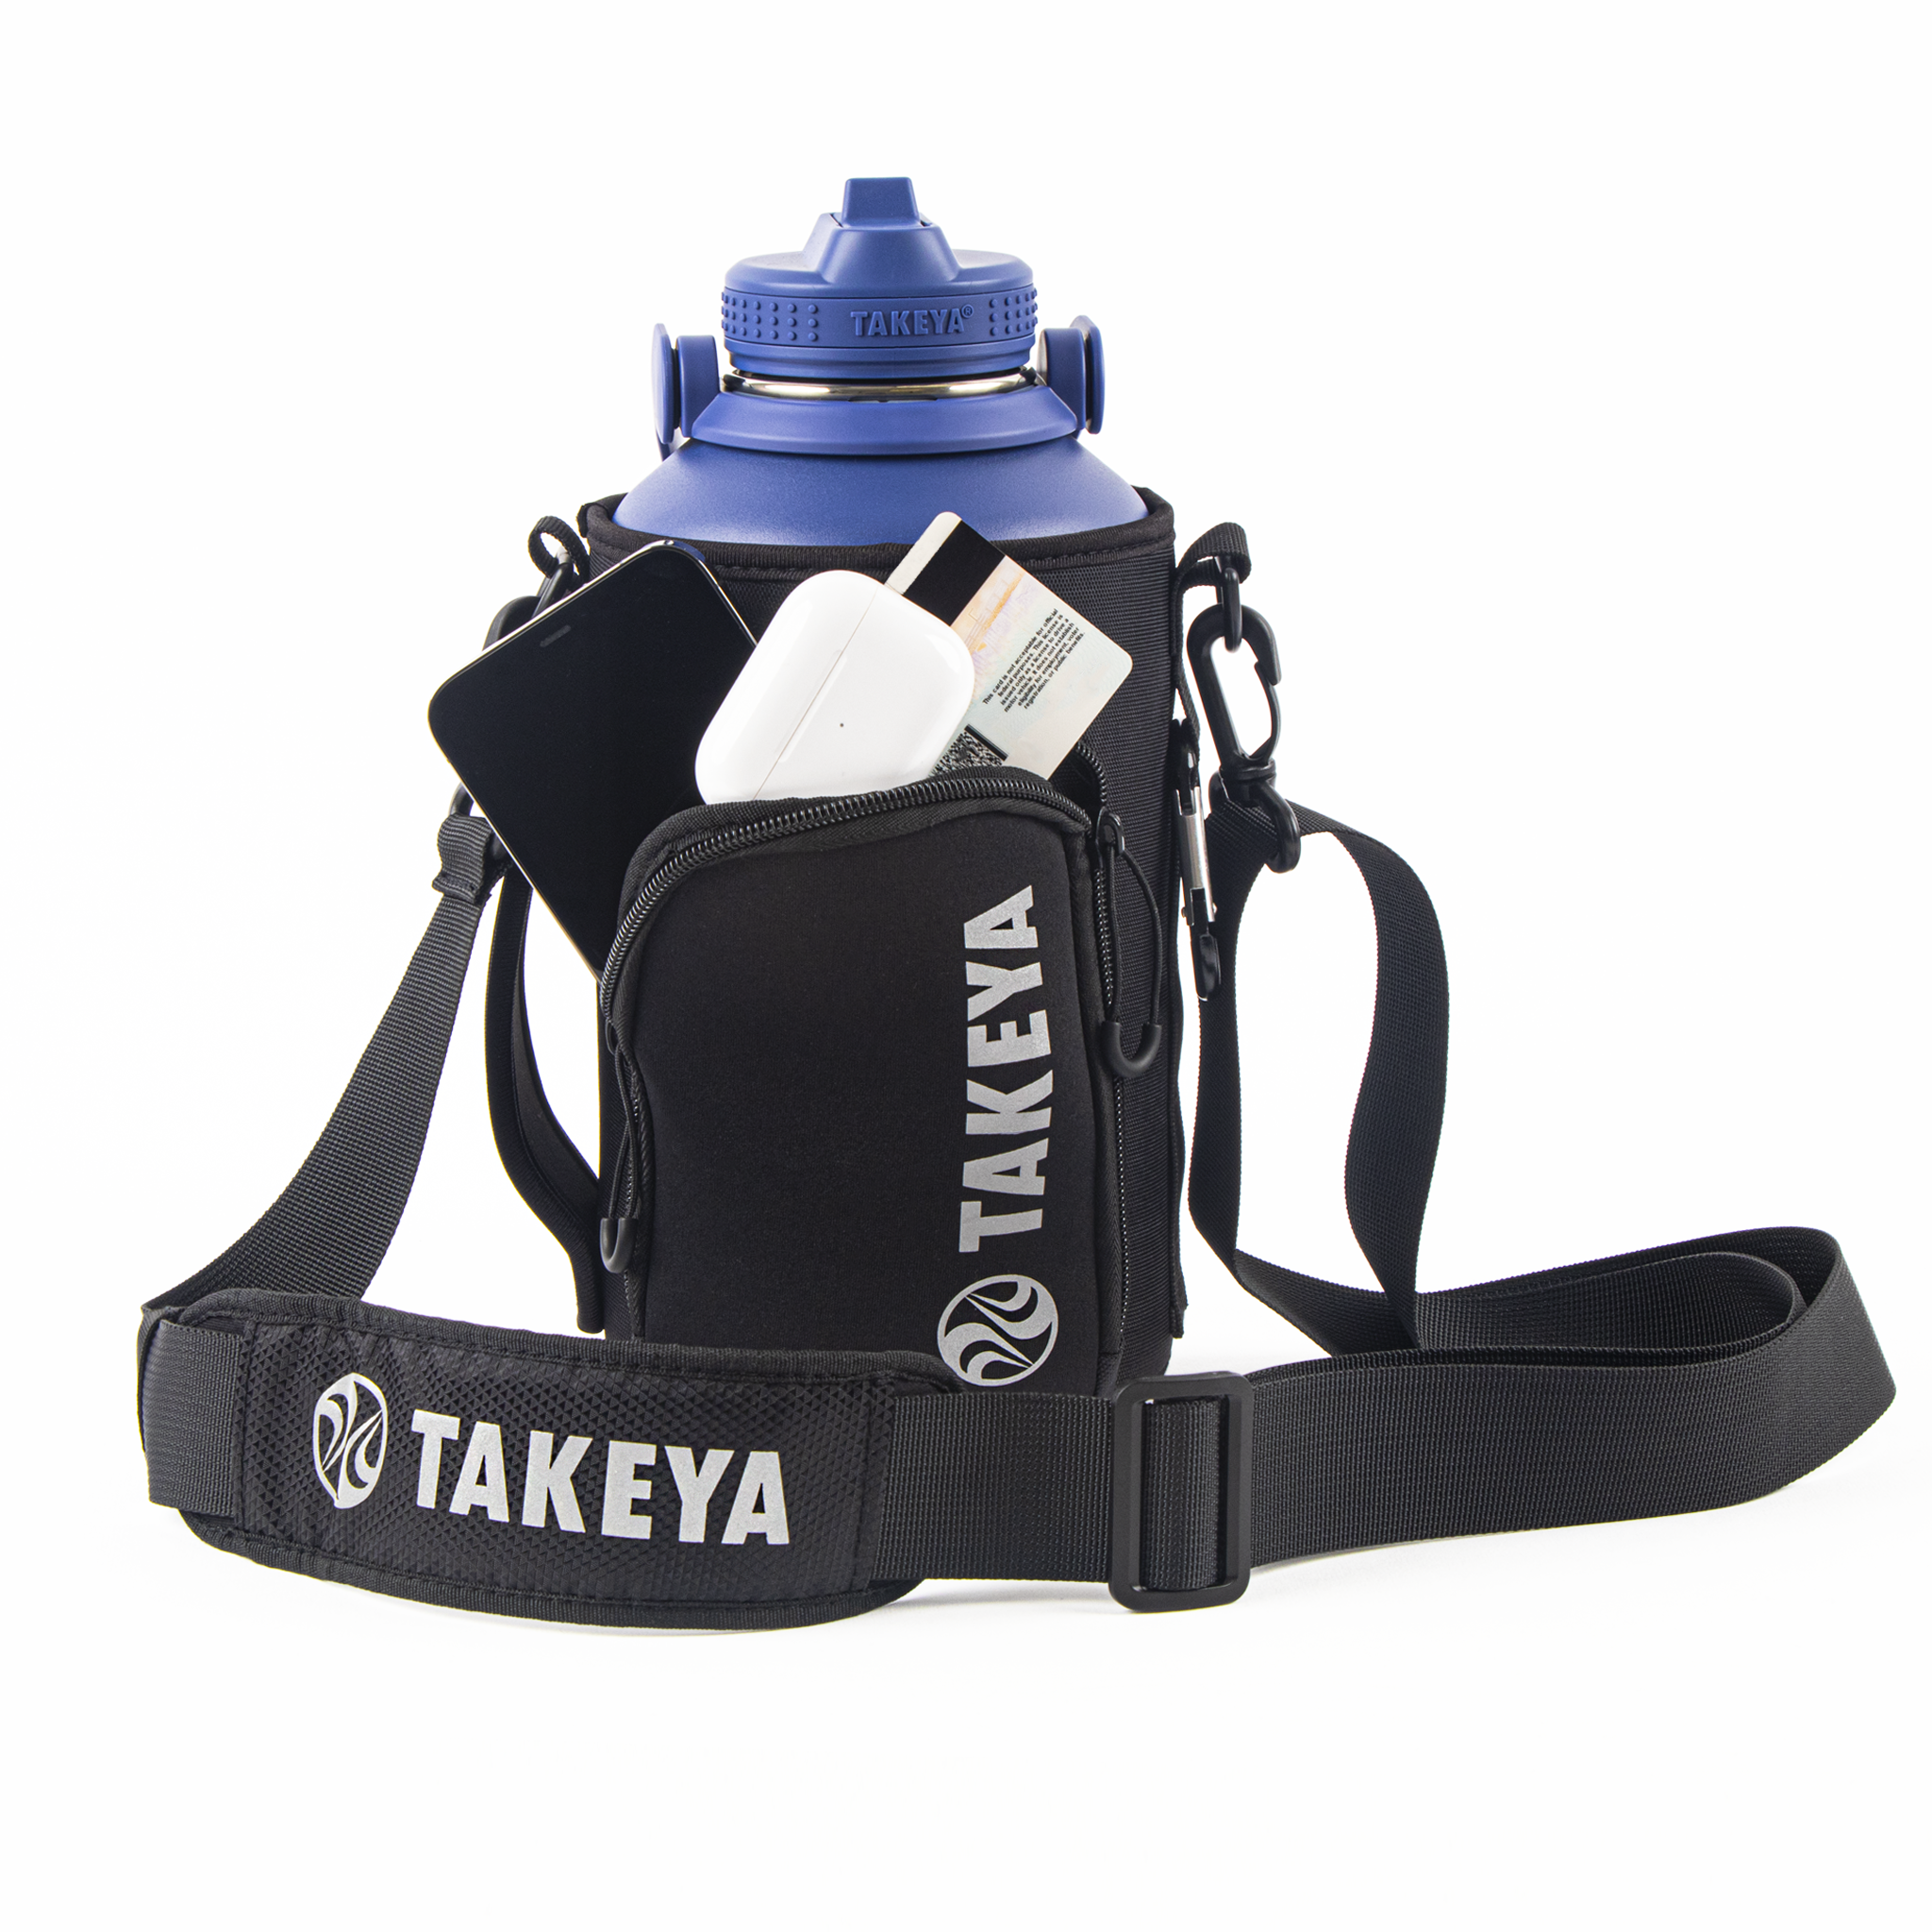 Coldest Carrier, Holder, Sleeve - Fits Insulated Stainless Steel Sports Water  Bottle, Adjustable Shoulder Strap, Holder Bag Case Pouch Cover (32 oz) 